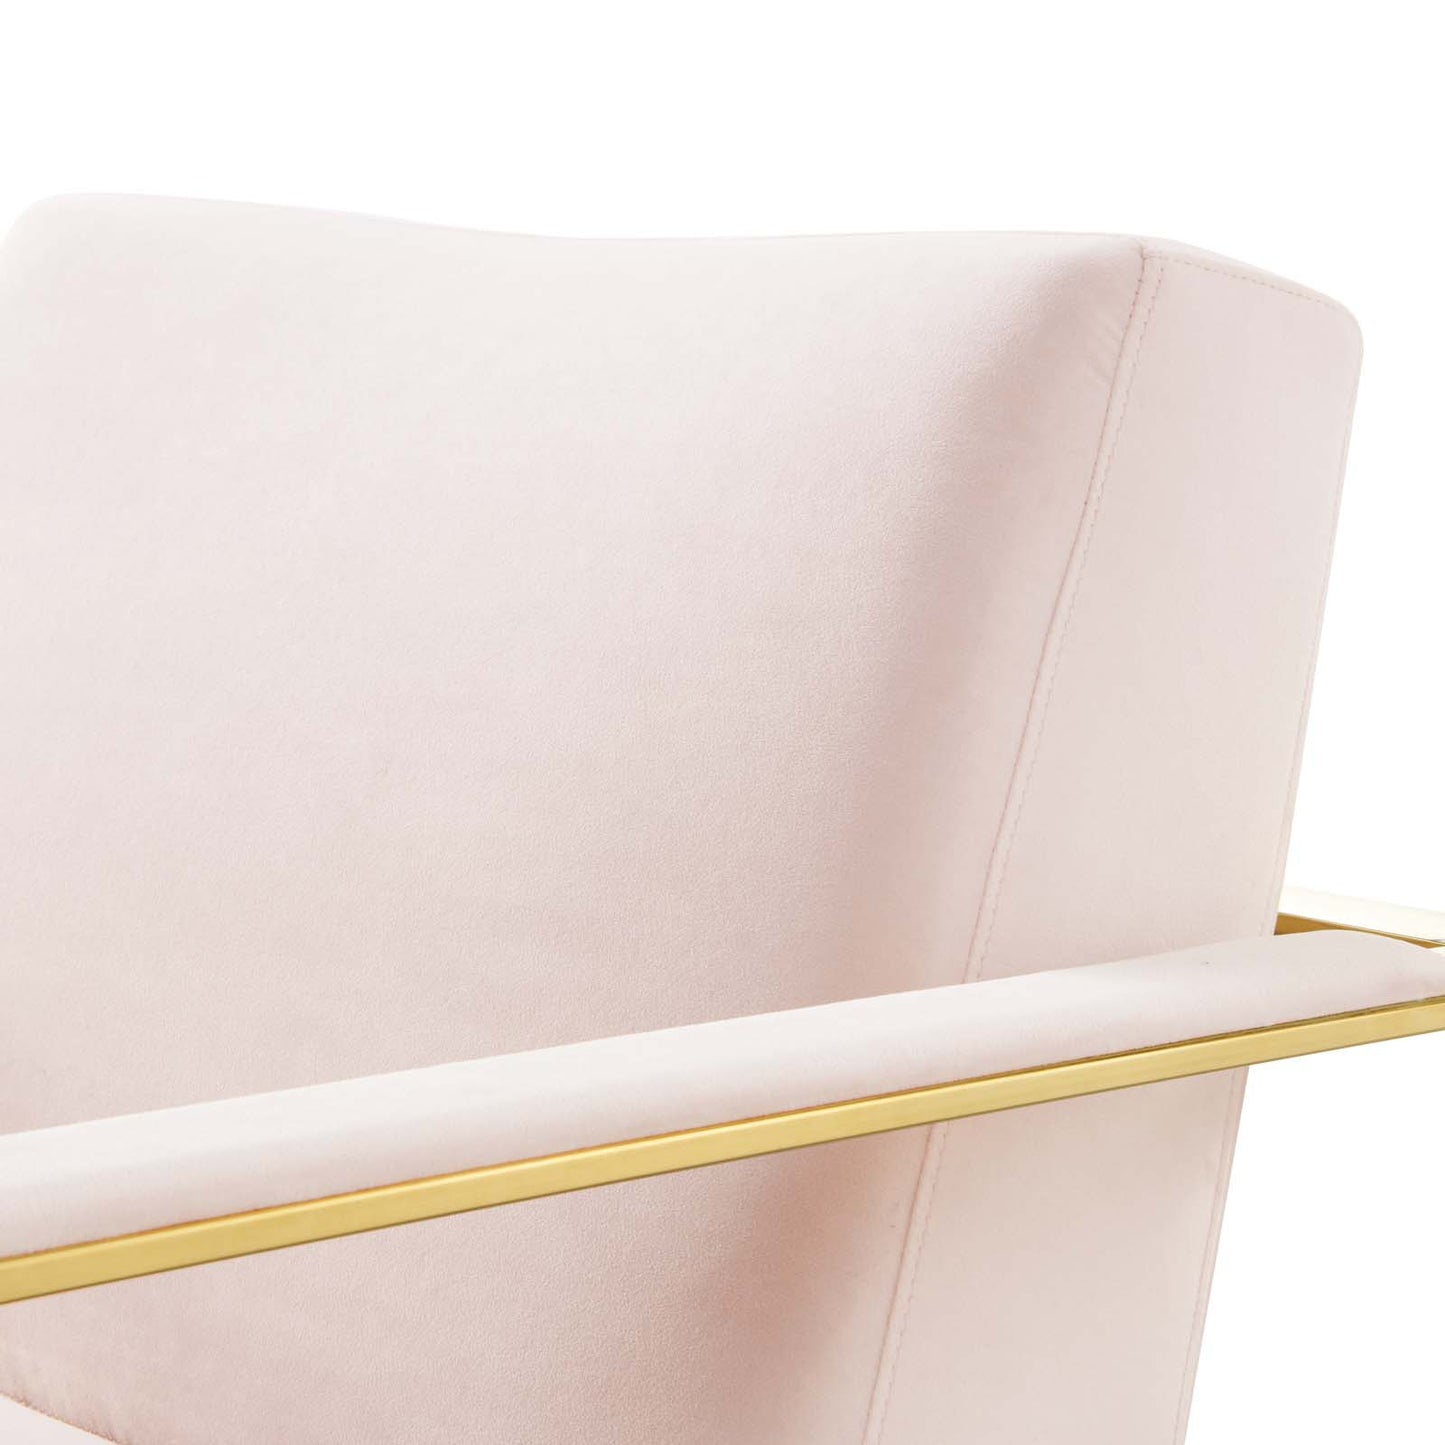 Seg Performance Velvet Accent Chair Gold Pink EEI-4219-GLD-PNK